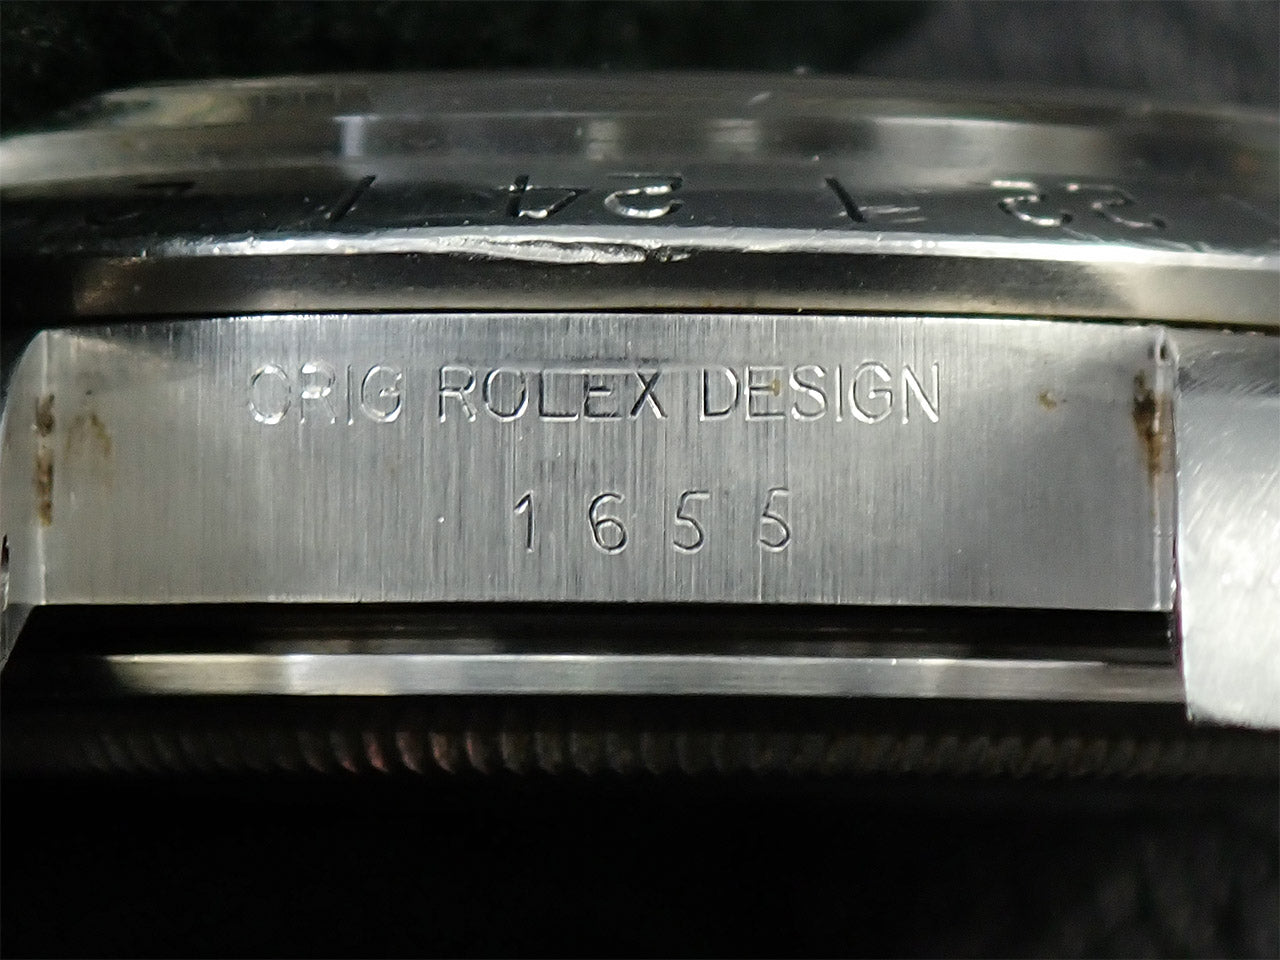 Rolex Explorer &lt;Warranty, Box, etc.&gt;